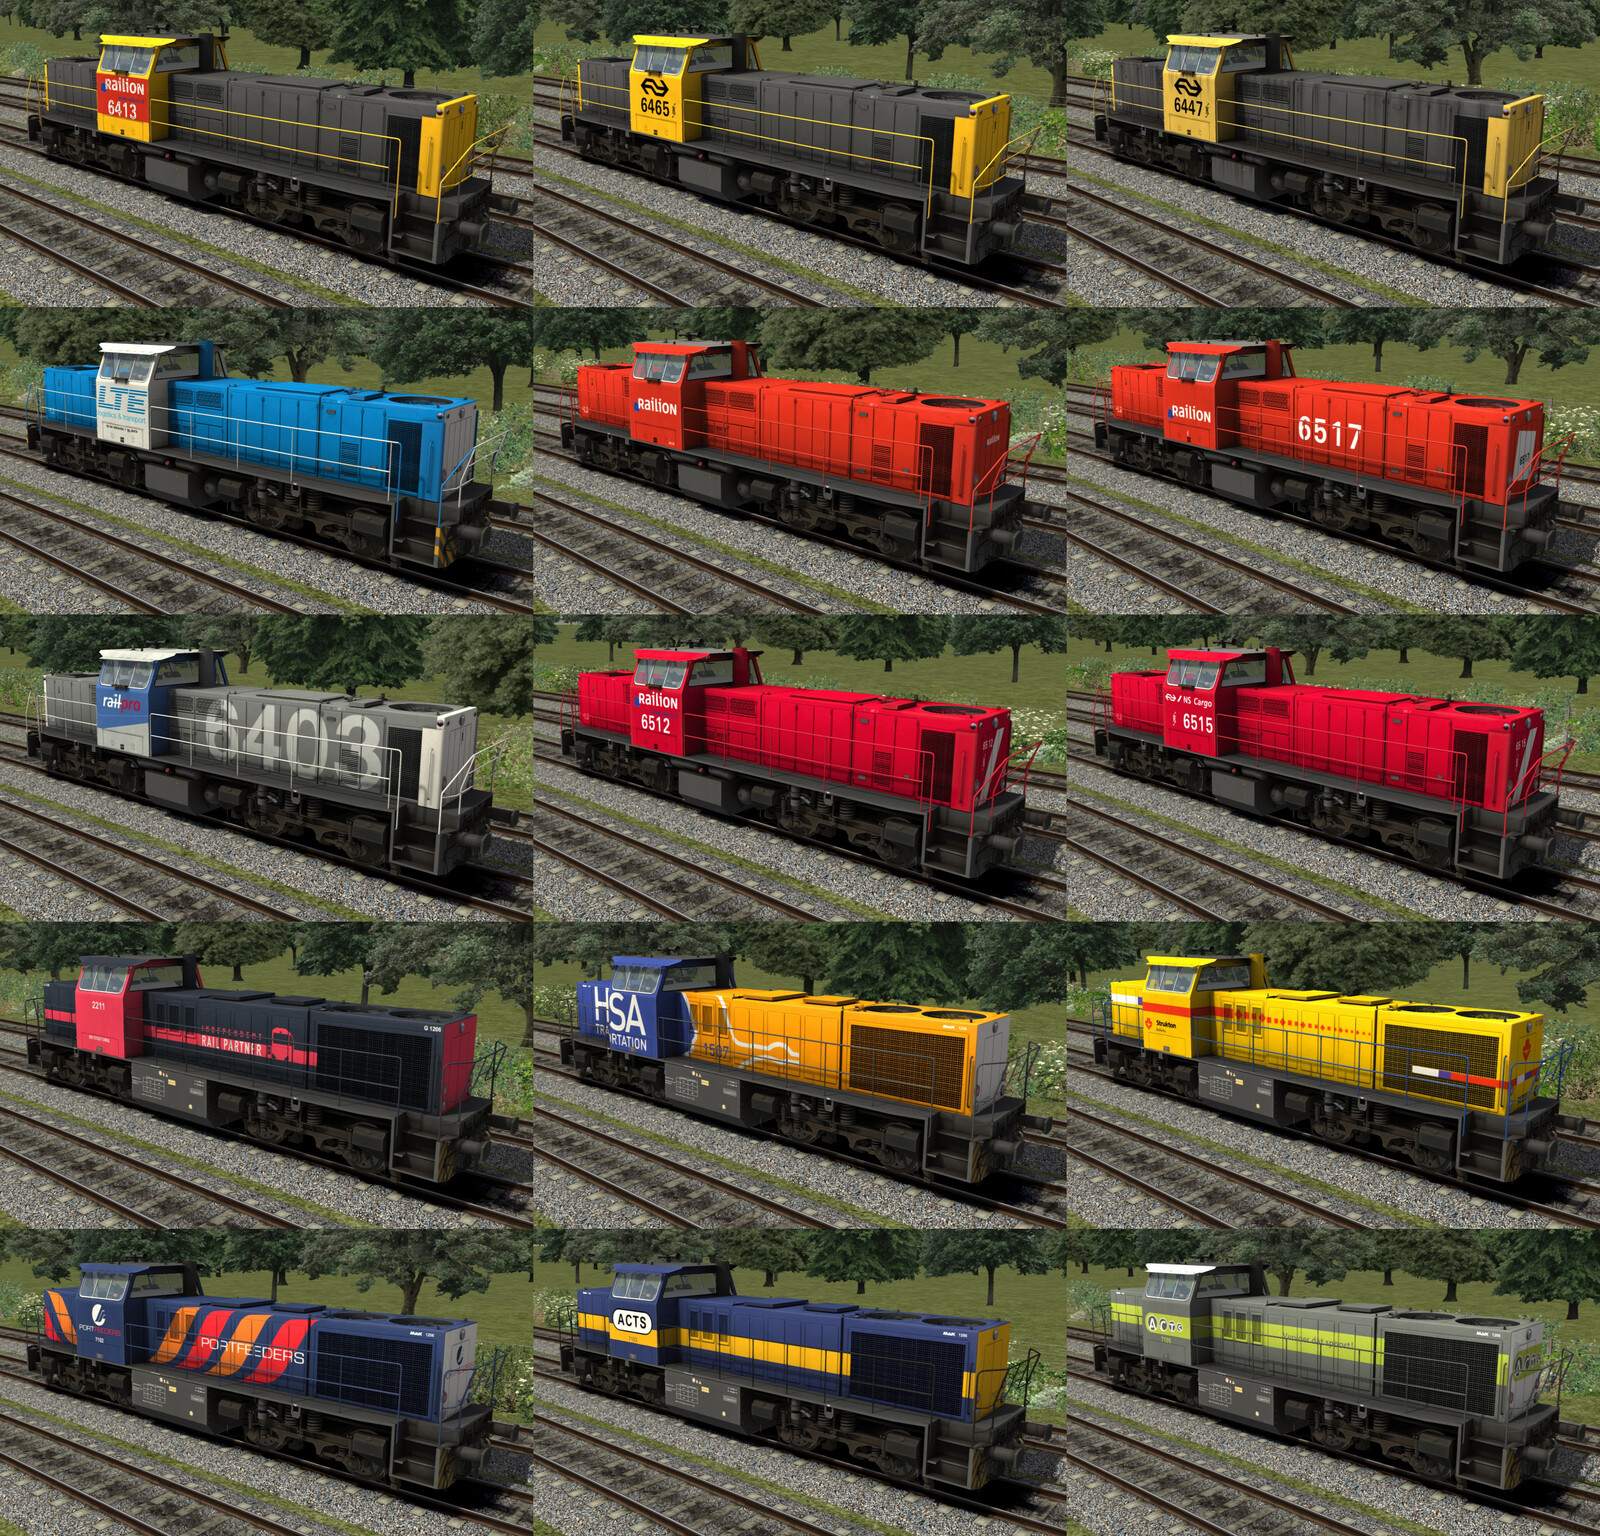 All 9 derivatives of the 6400 locomotive plus 6 MaK g1206 derivatives.